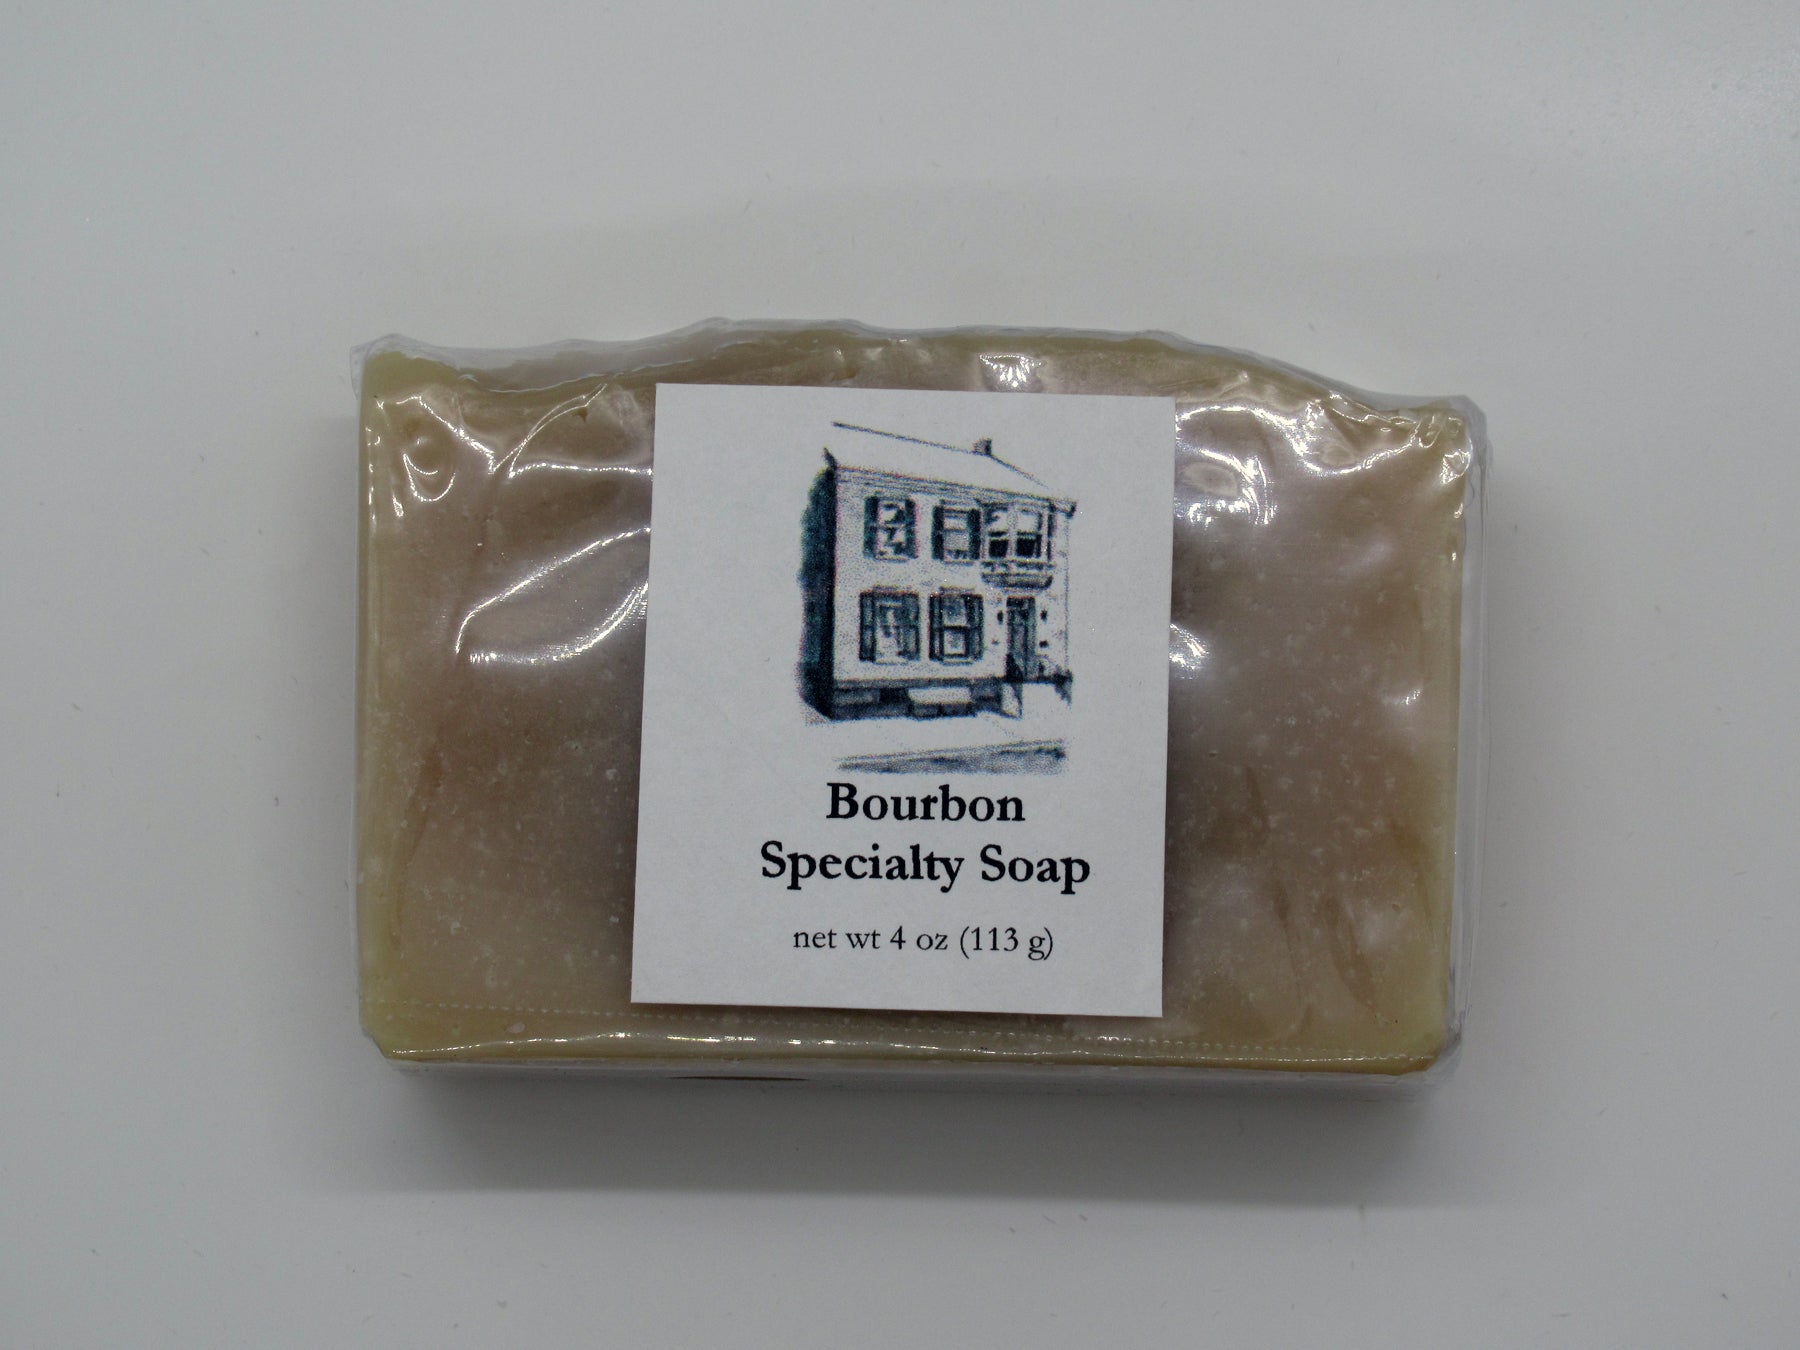 Bourbon Specialty Soap